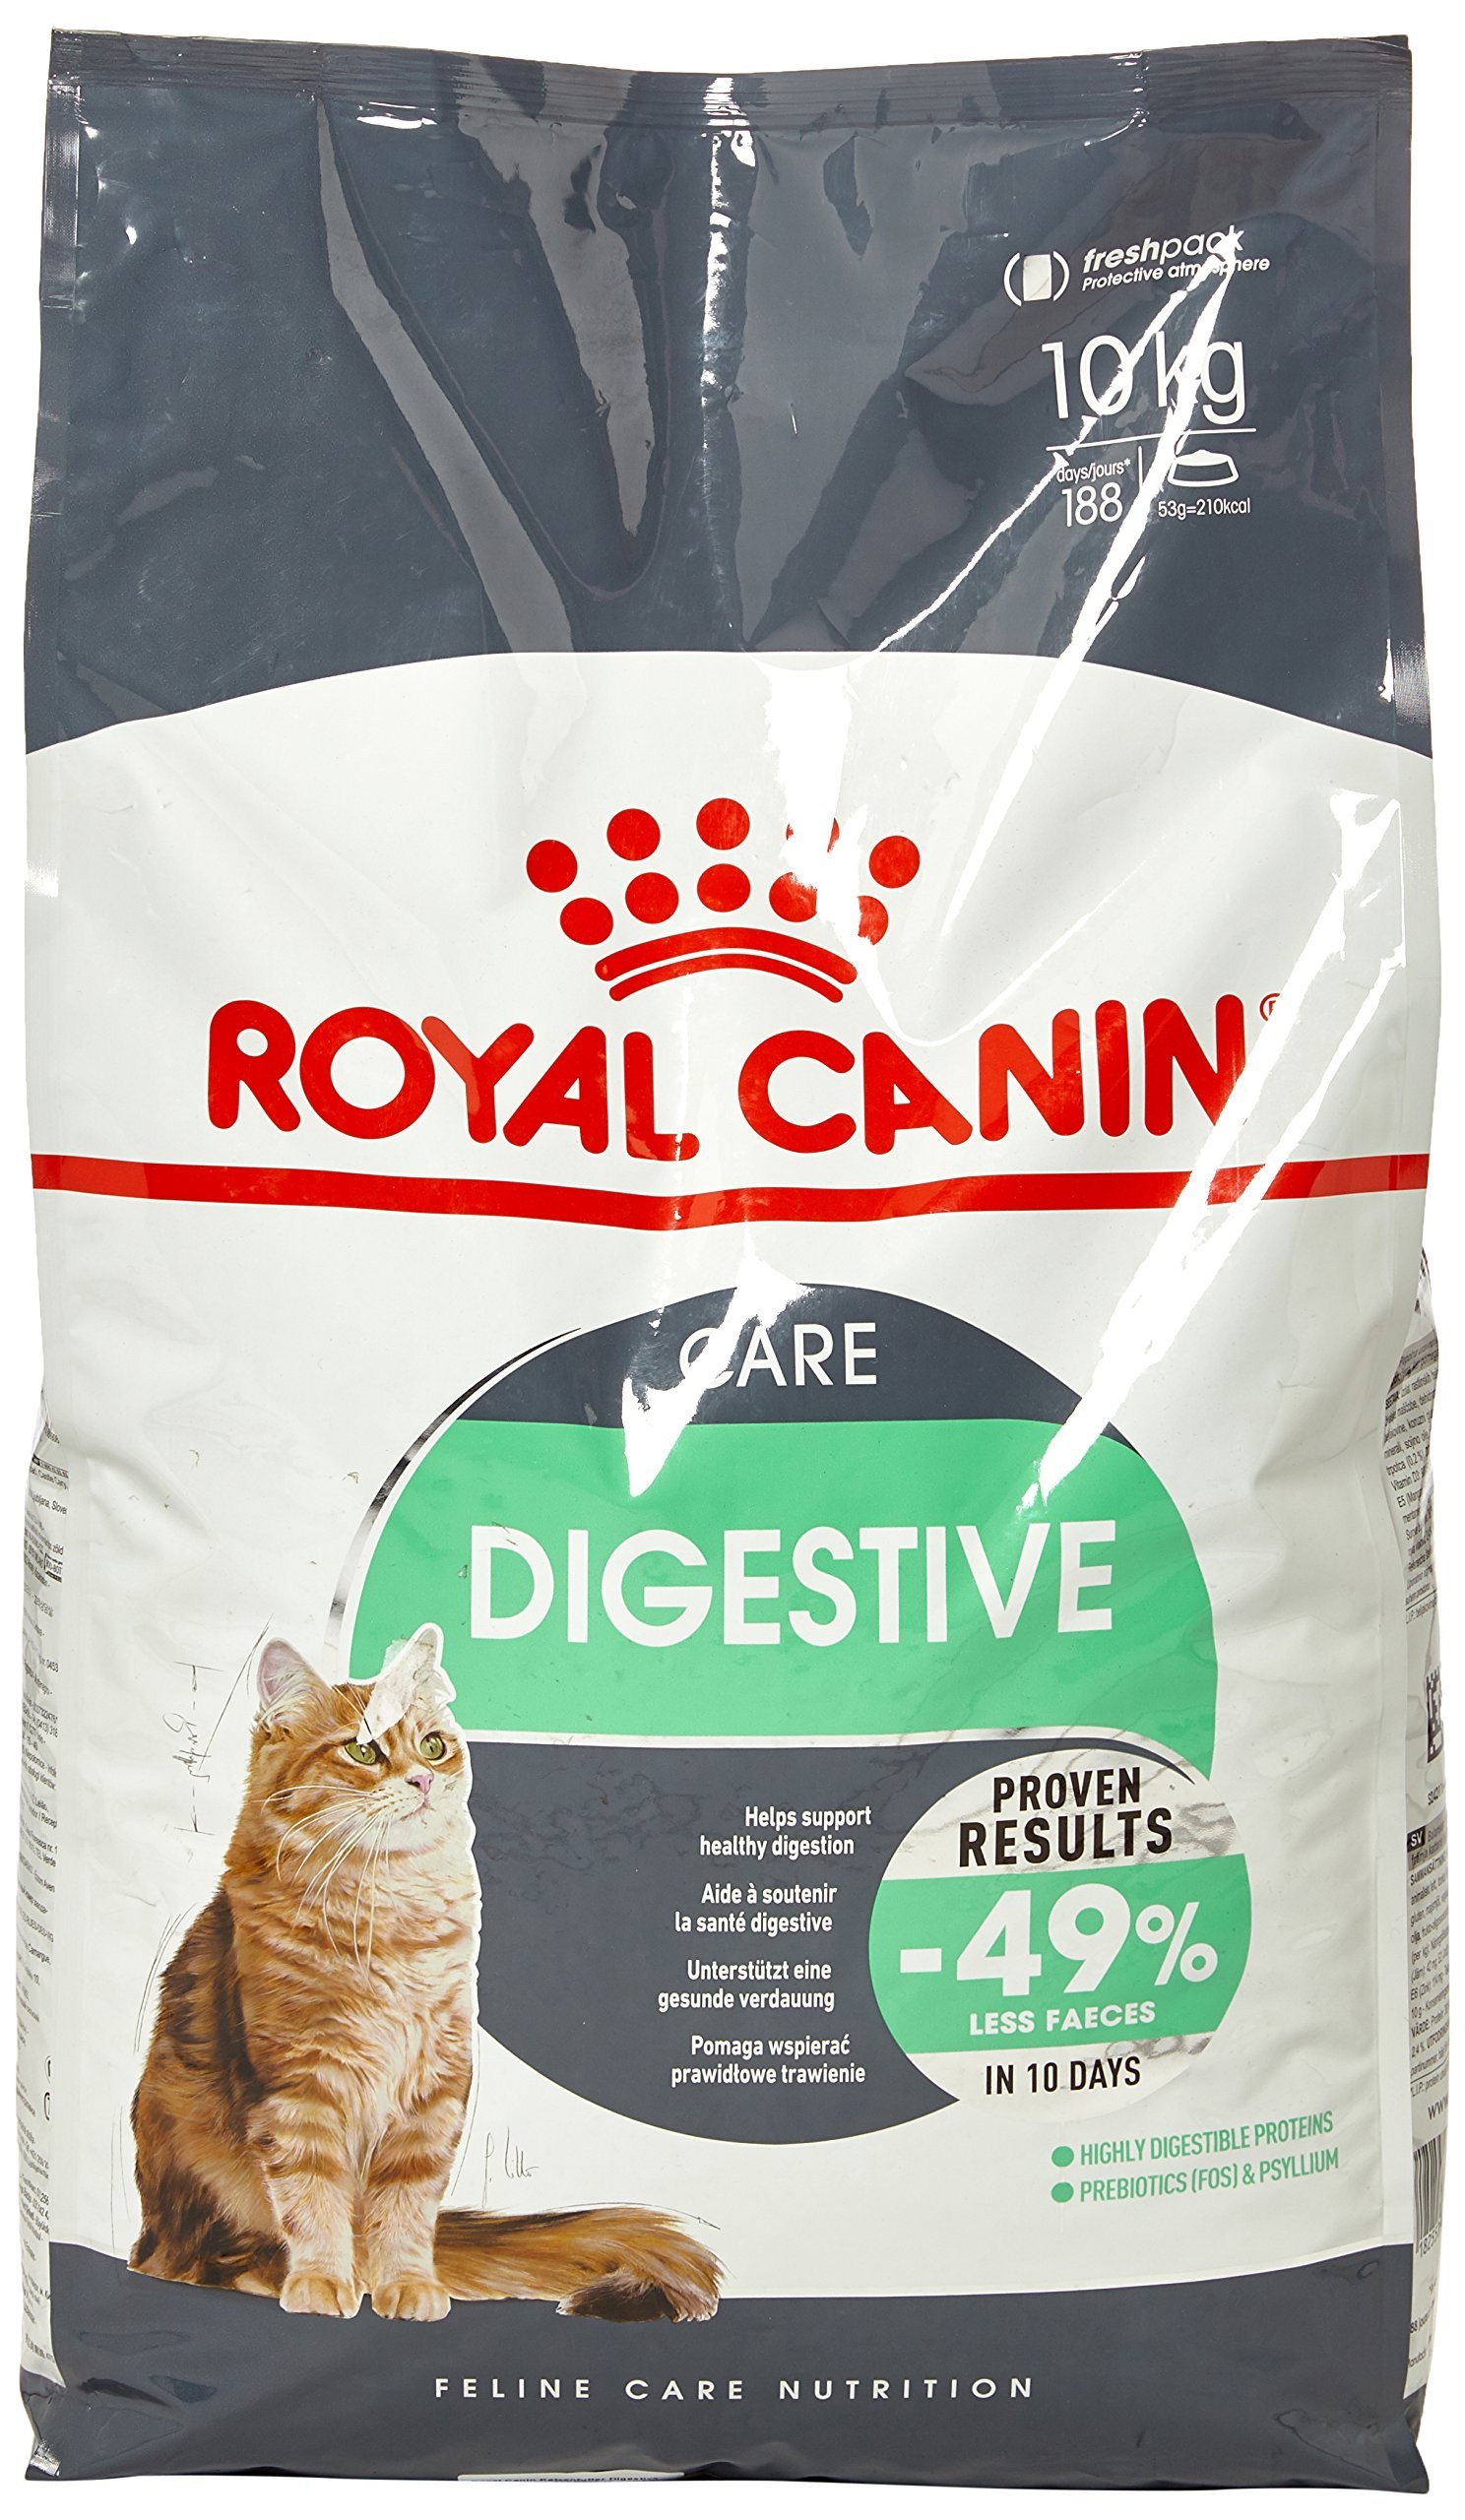 Royal canin digestive для кошек. Роял Канин Digestive Care для кошек. Роял Канин Пурина для кошек. Роял Канин Дайджестив для кошек. Корм для кошек Royal Canin Digestive Comfort.